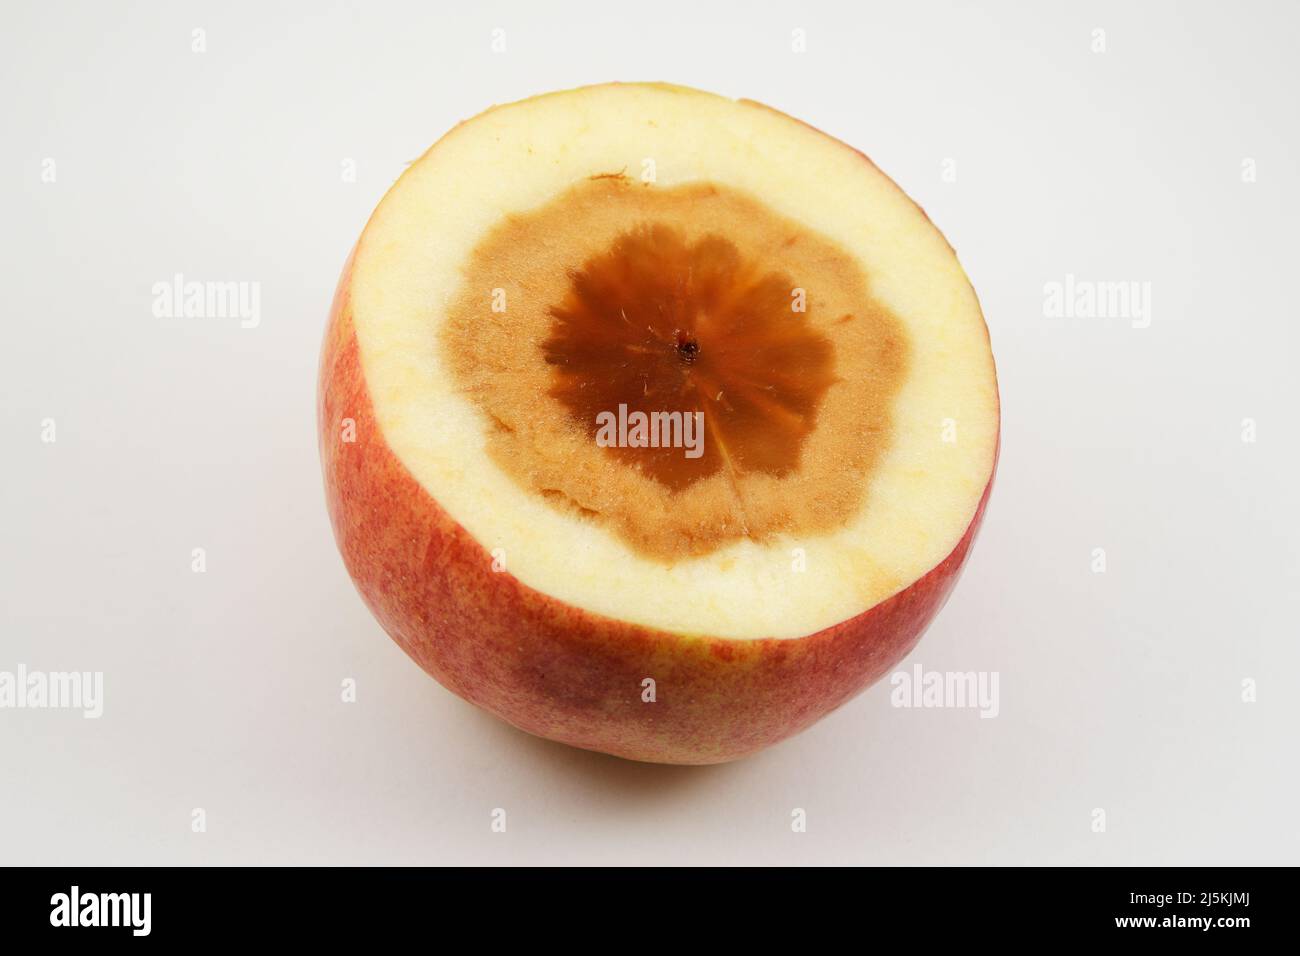 manzana cortada con núcleo podrido sobre fondo neutro Foto de stock